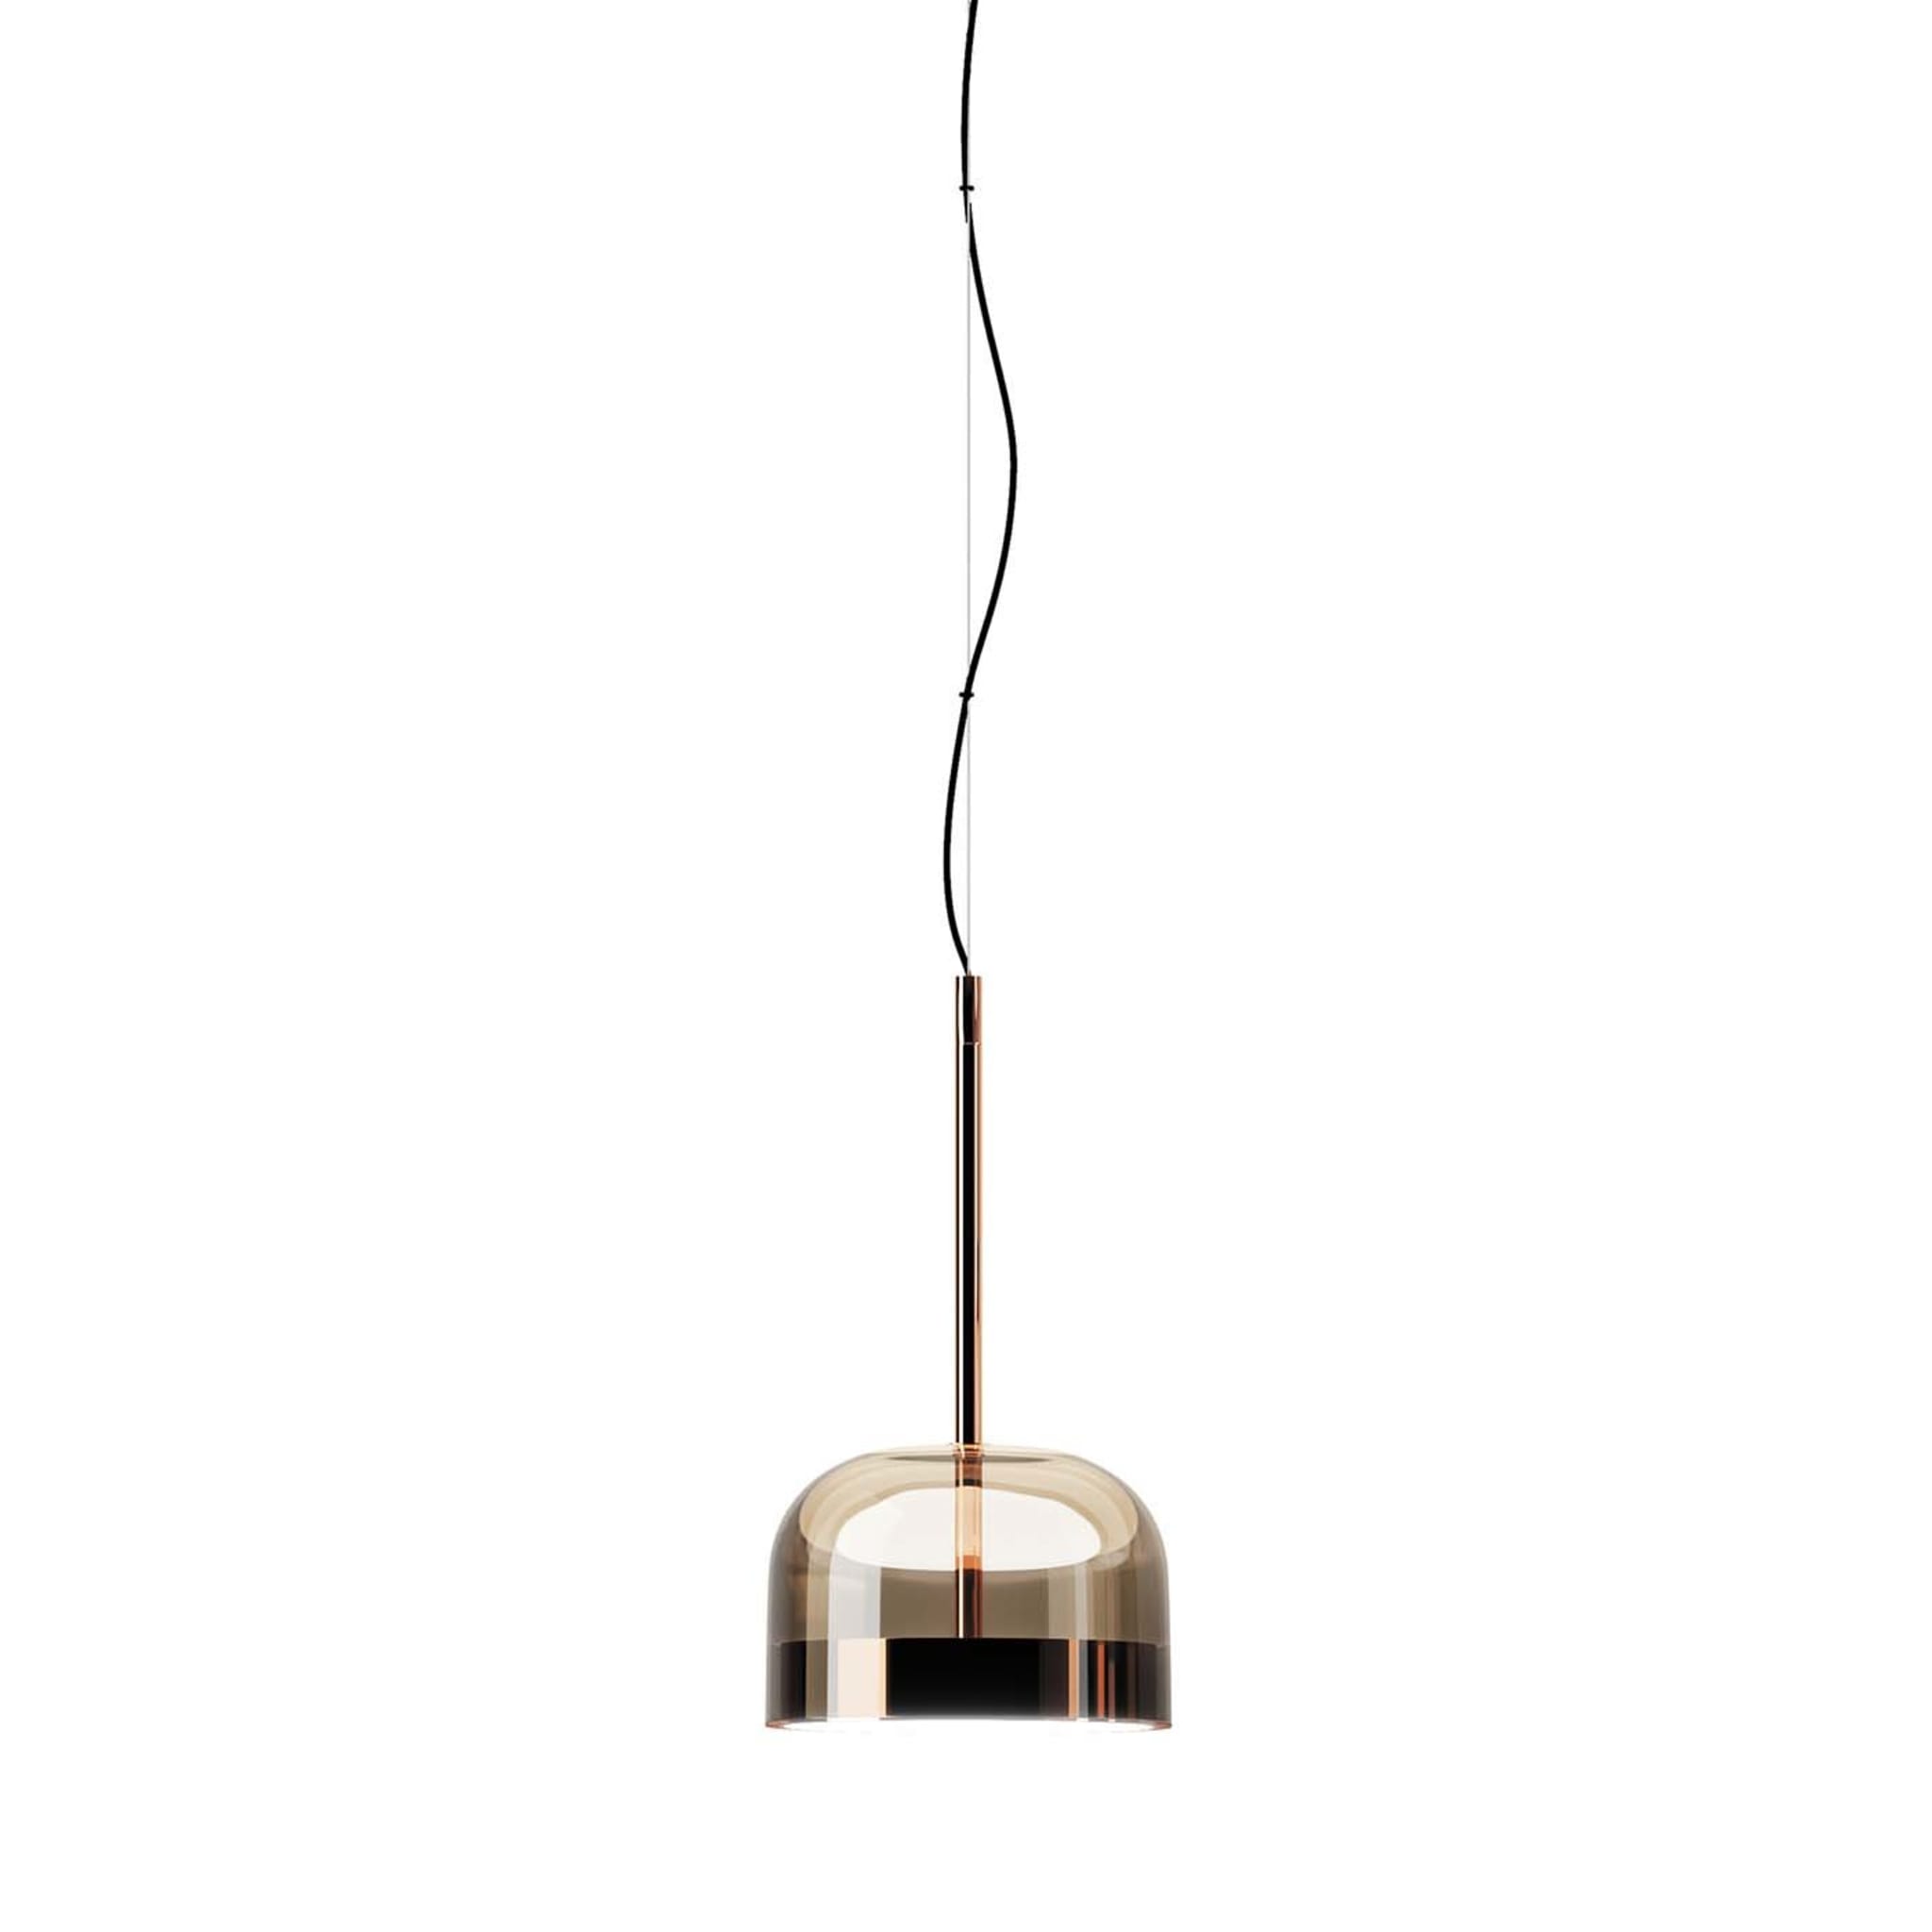 Petite lampe à suspension Equatore de Gabriele et Oscar Buratti - Vue principale